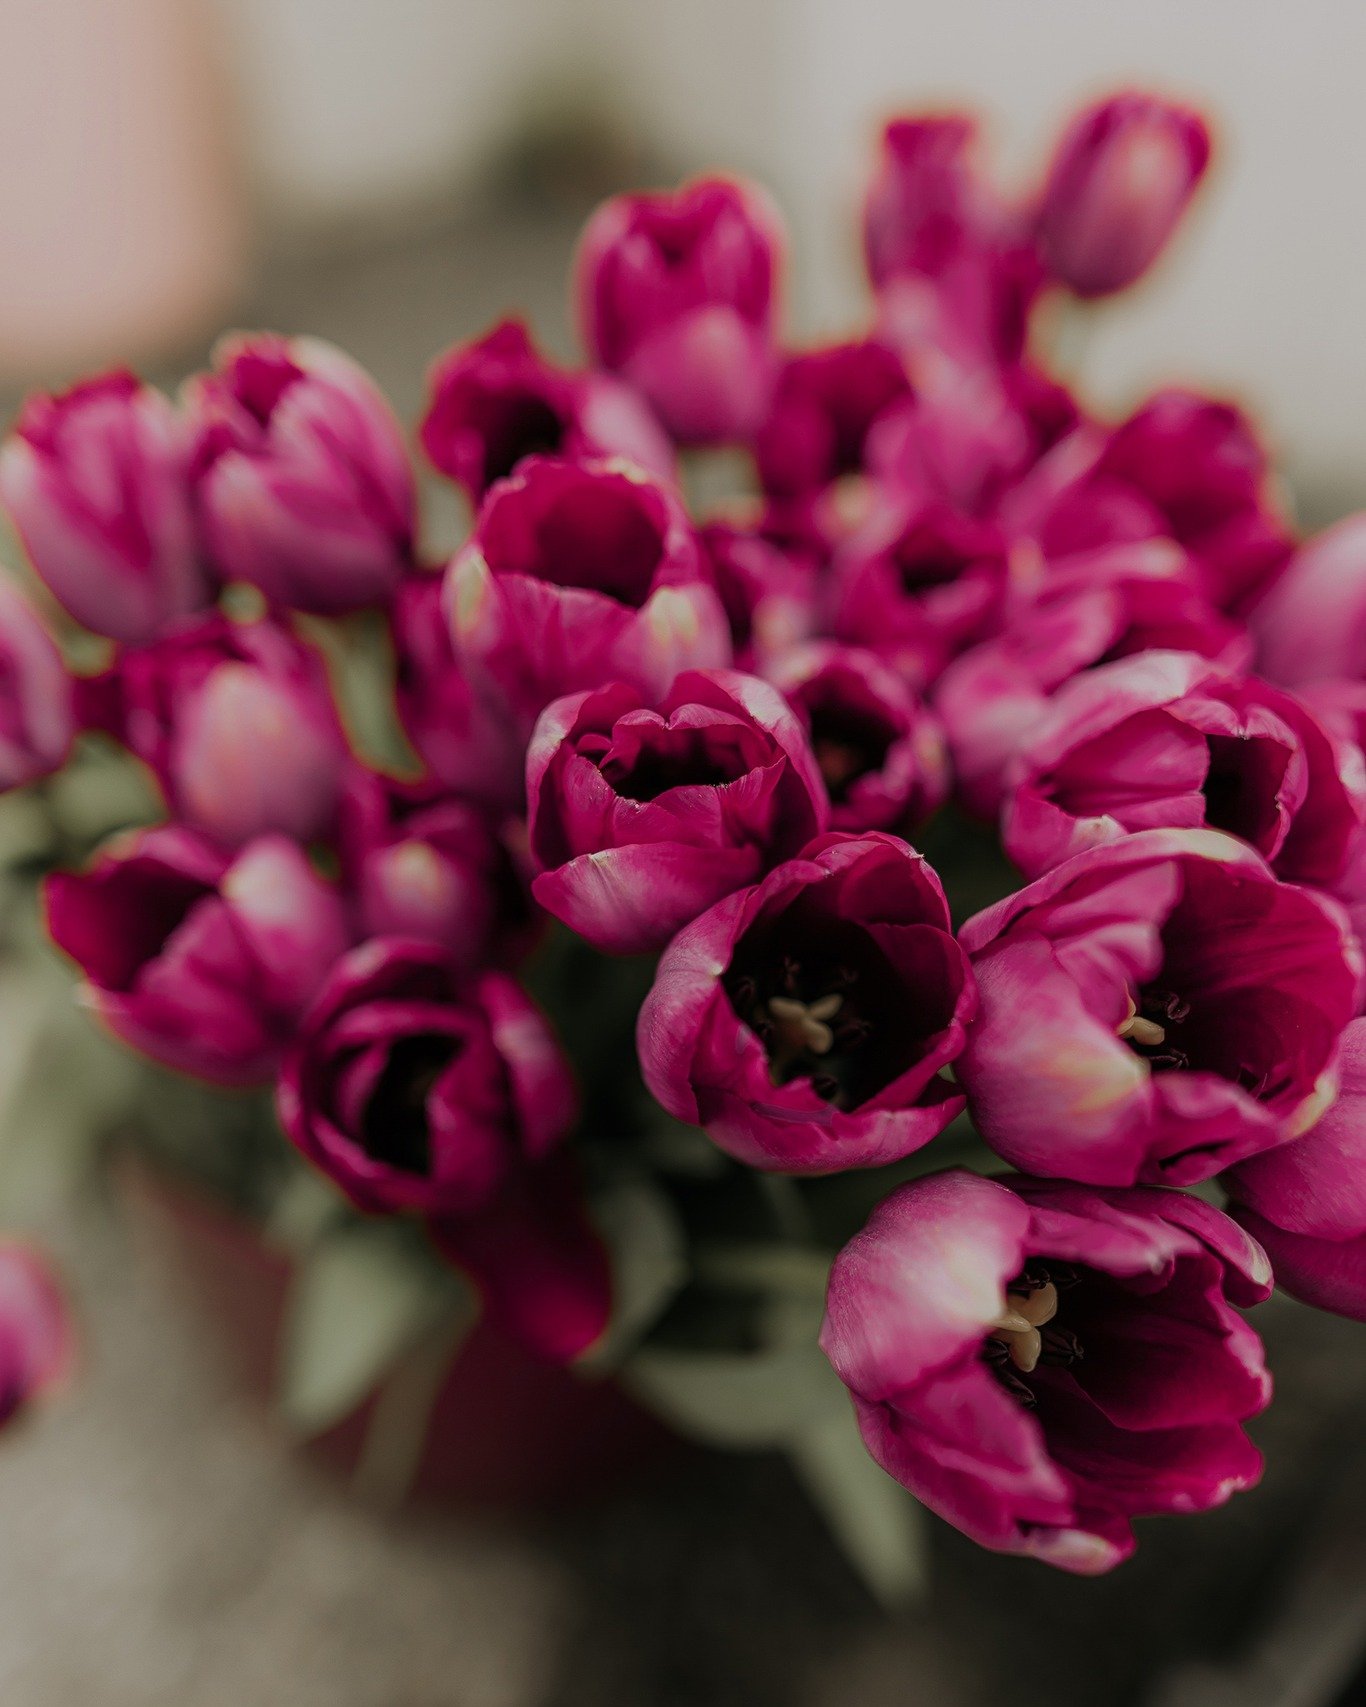 Tomorrow's posies are full of purple pretties 💜

#weekendvibes #newcastleflorist #flowerdeliverynewcastle
#flowerdeliverylakemacquarie #flowerdeliverymaitland